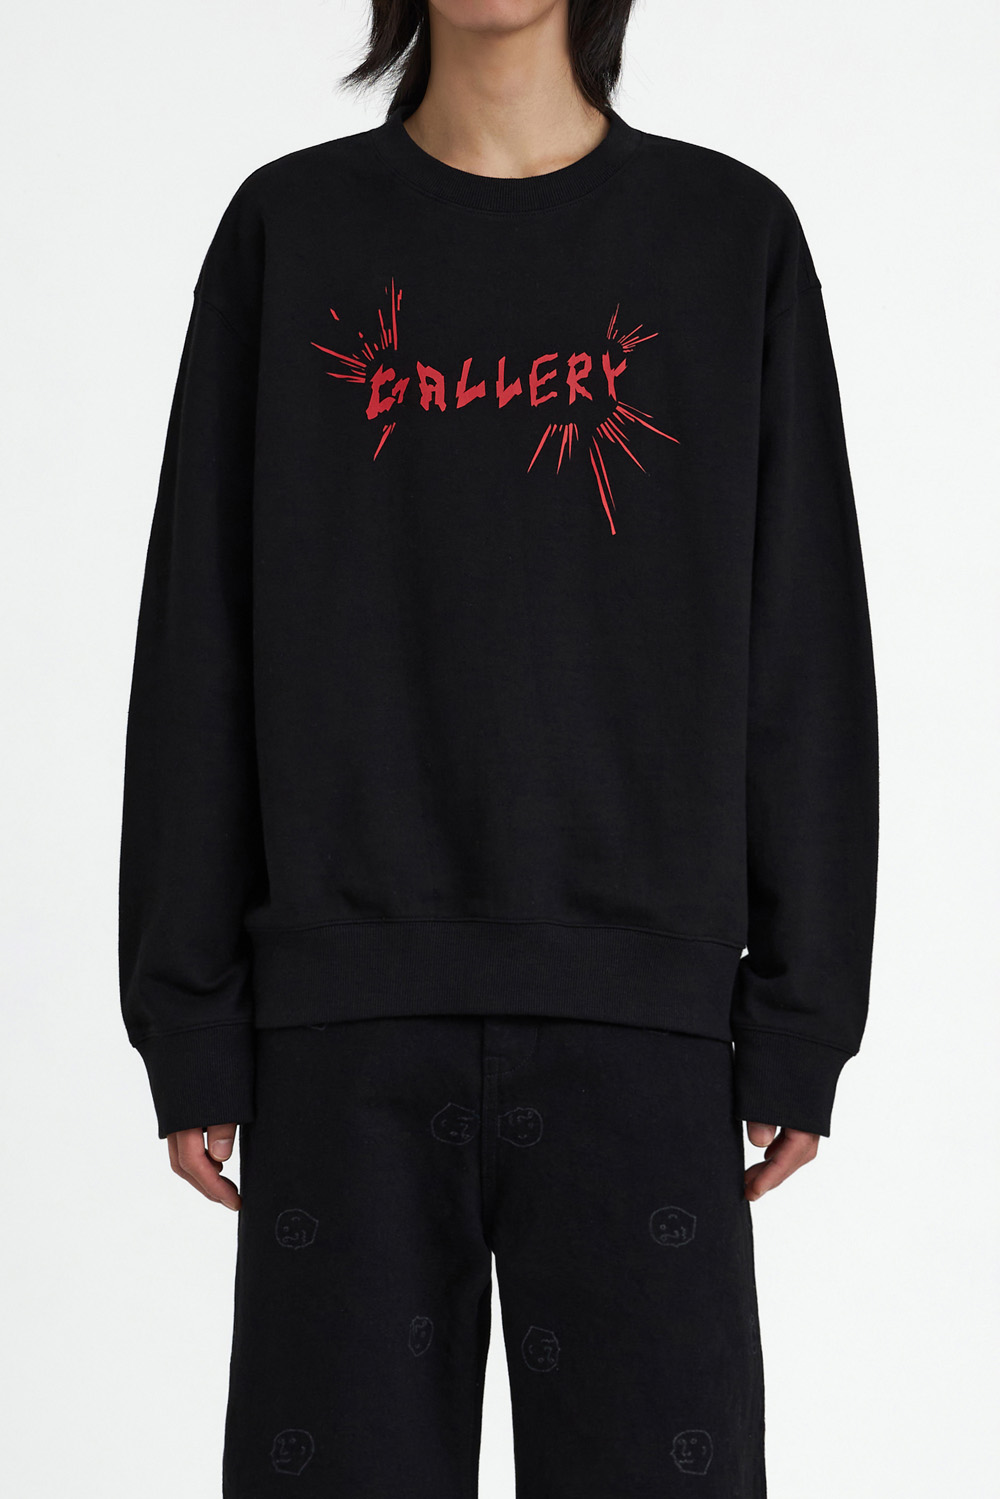 Gallery Bomb Graphic Sweatshirt - Black